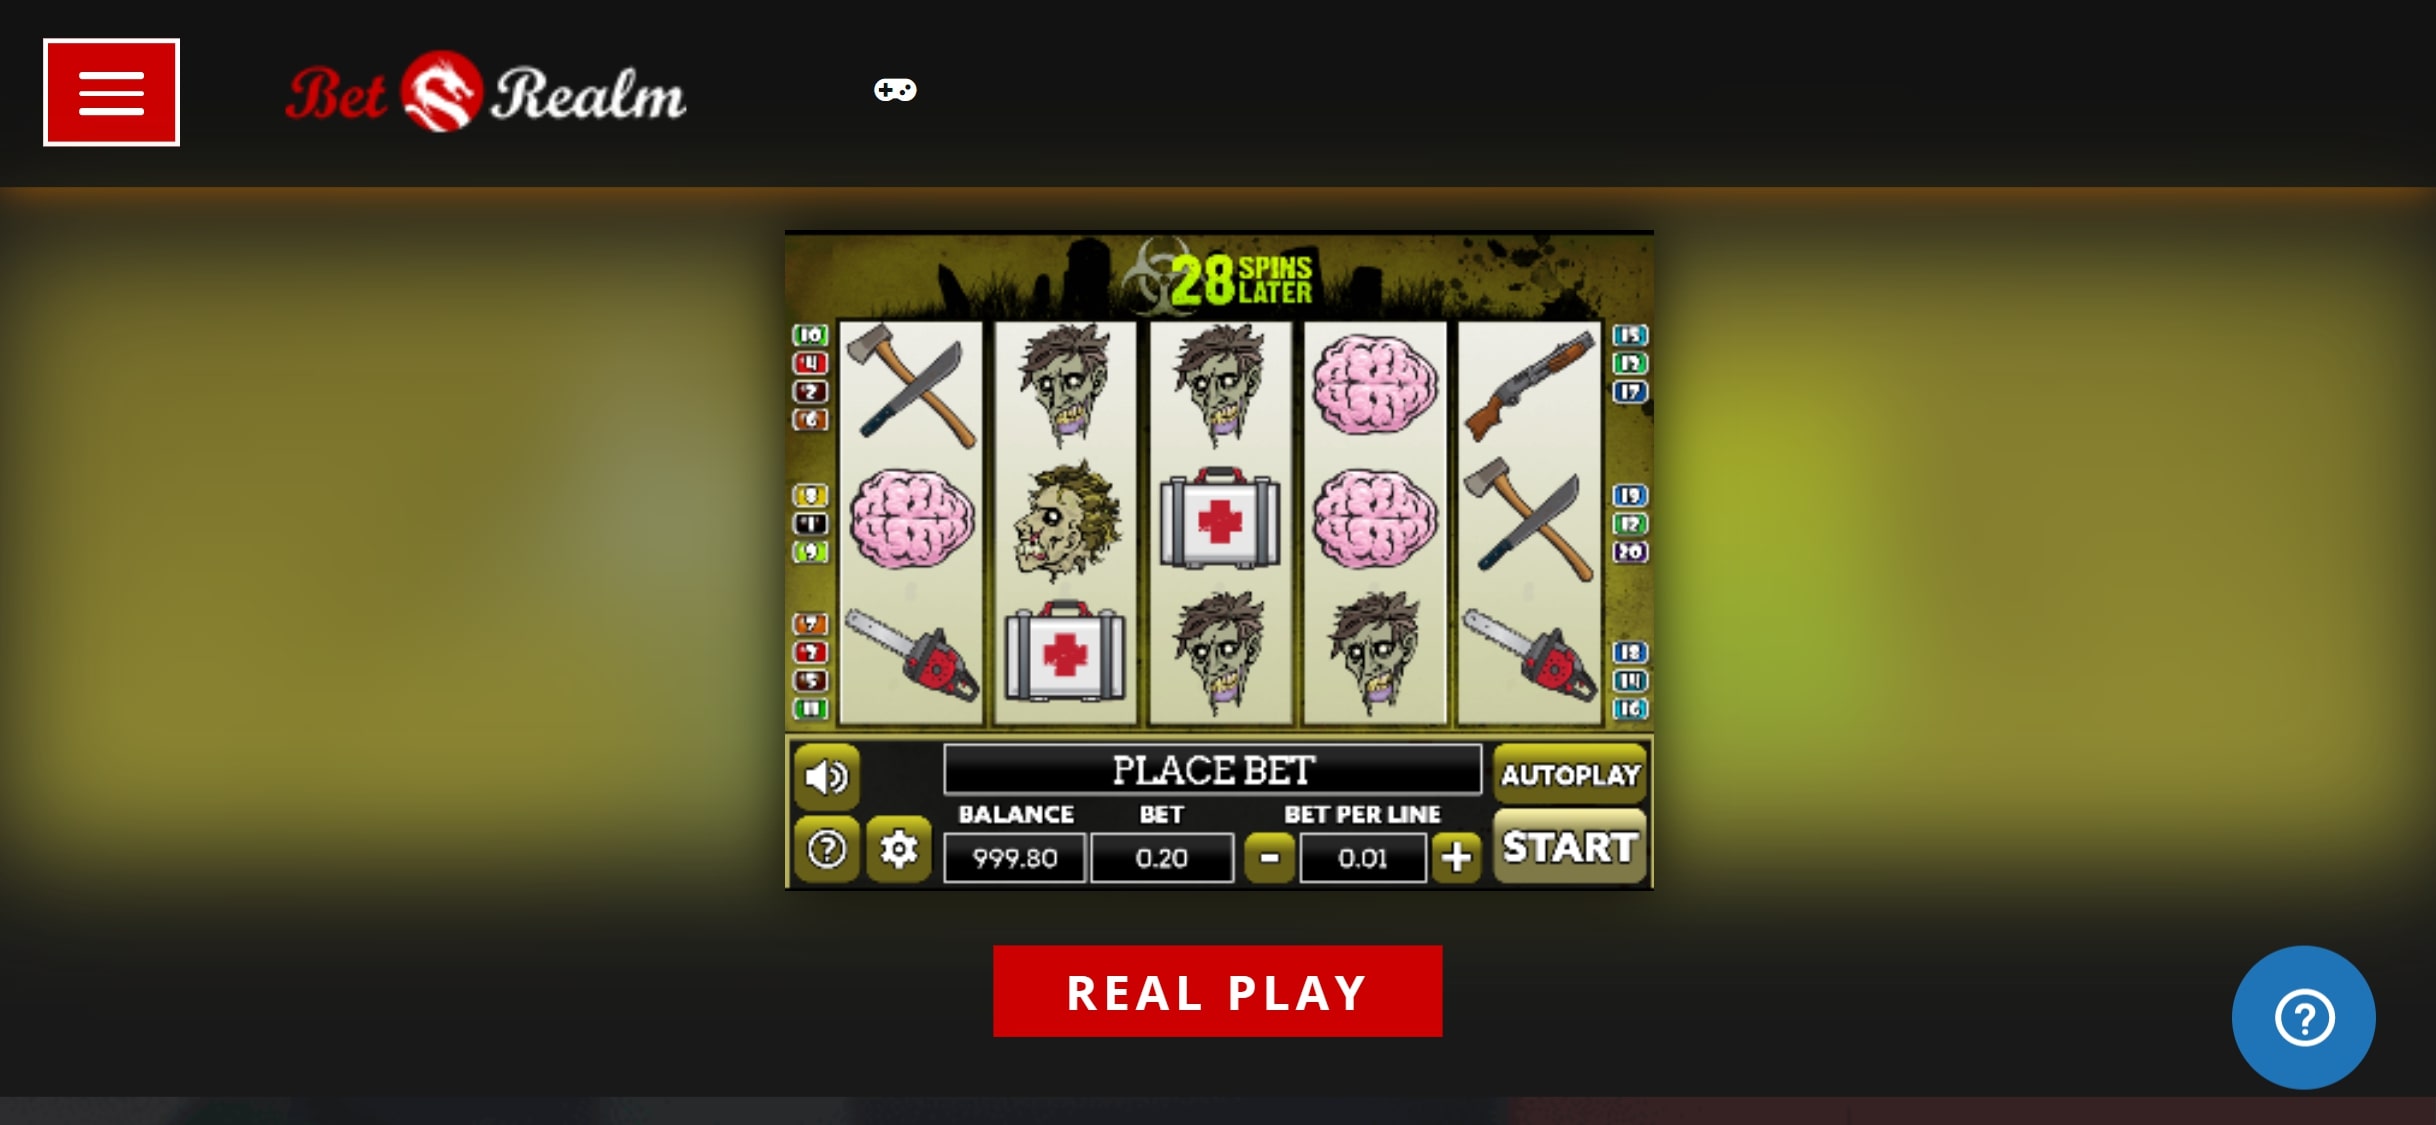 Betrealm Casino Mobile Slot Games Review